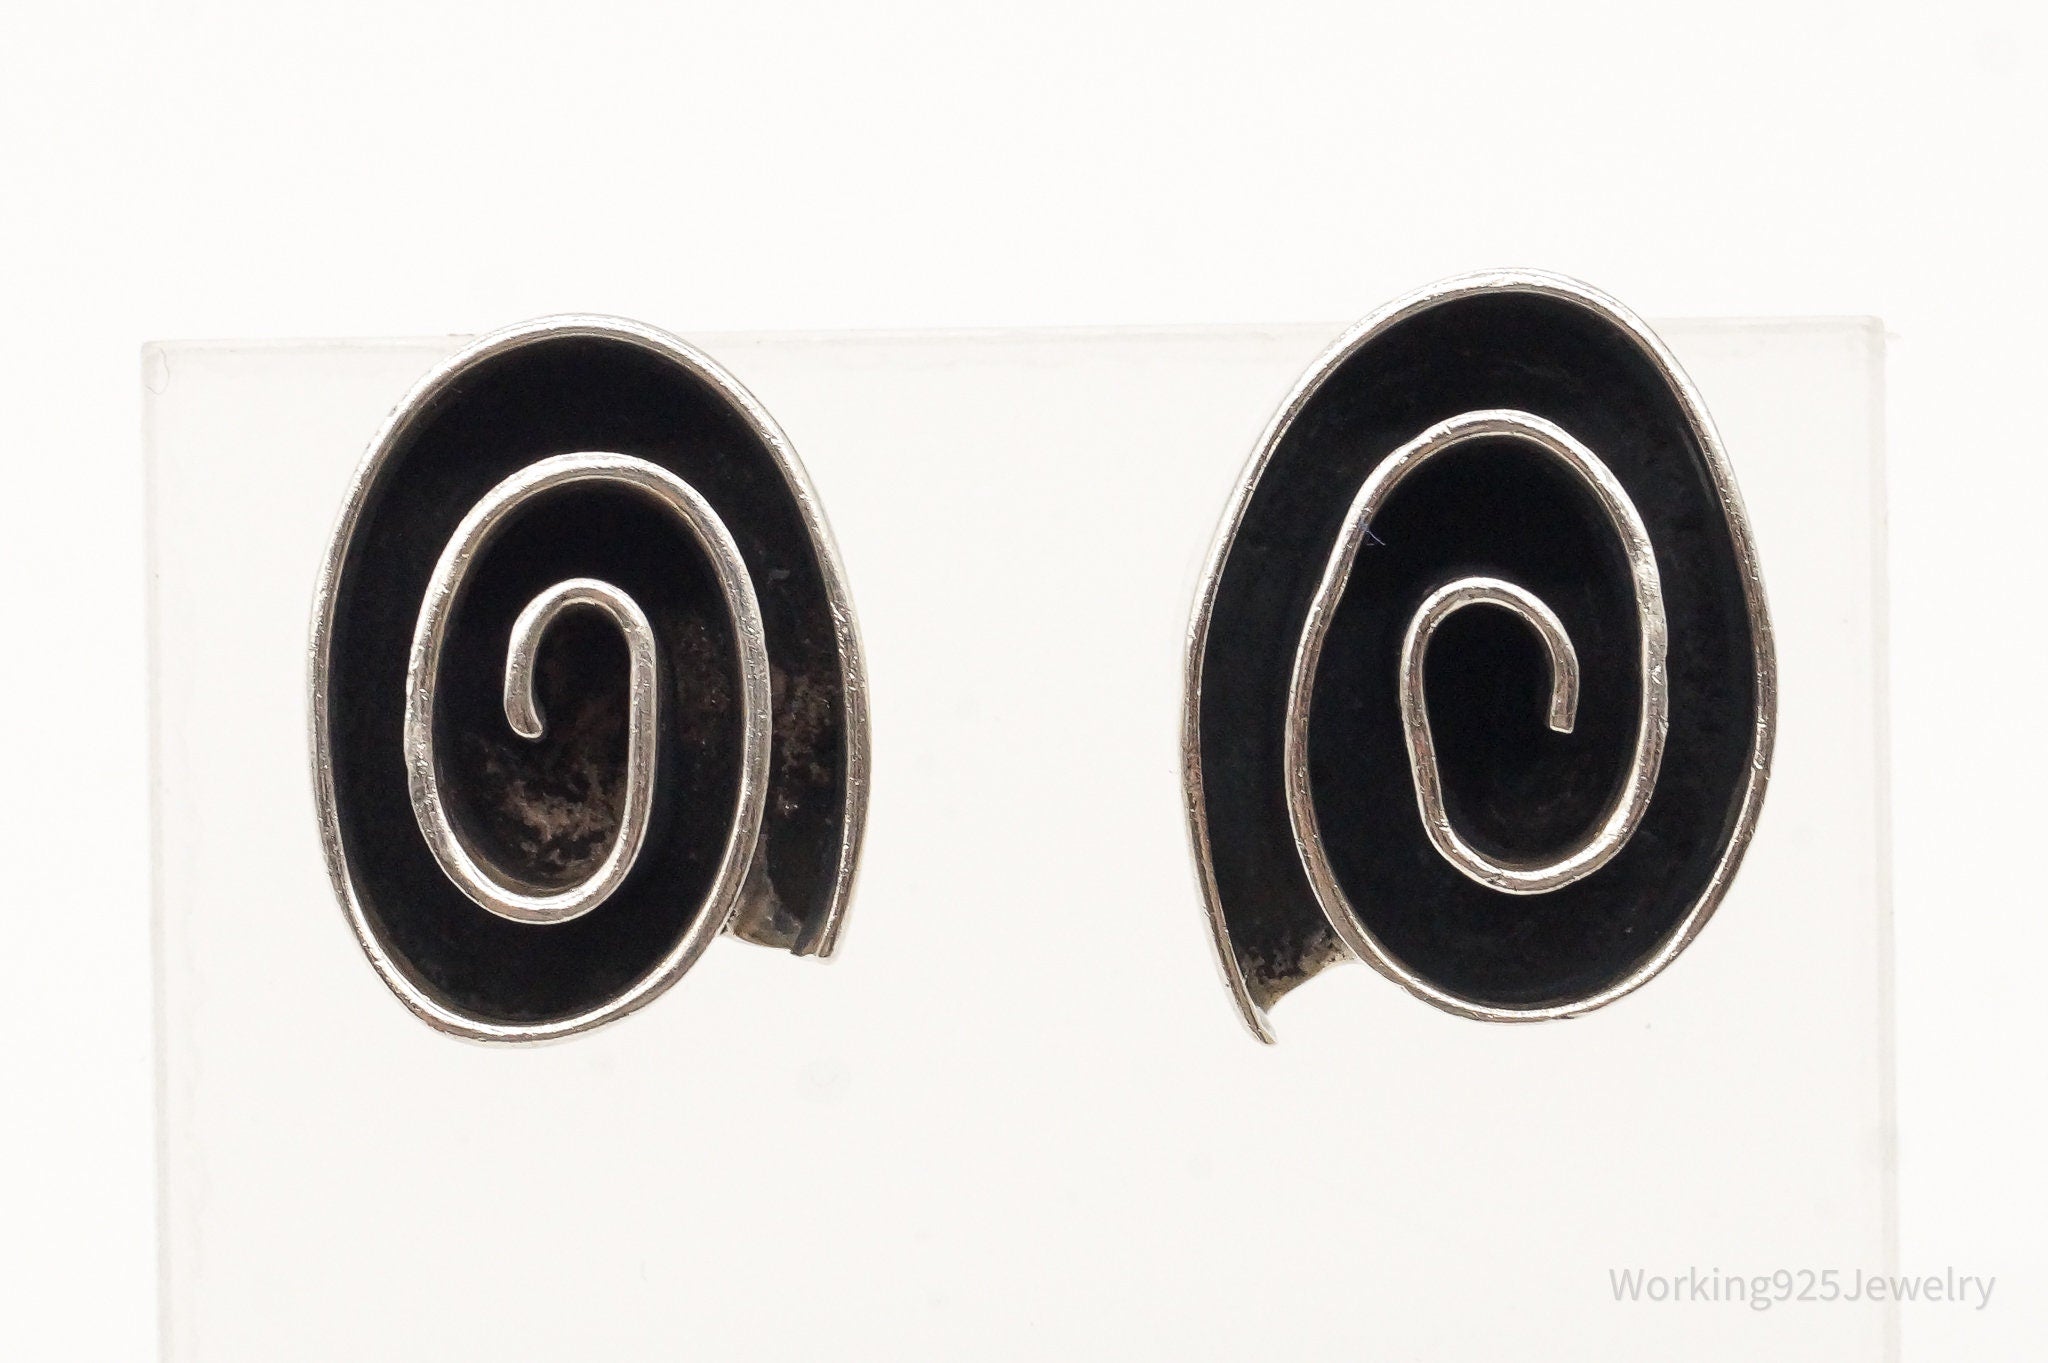 Vintage Modernist Spirals Sterling Silver Earrings